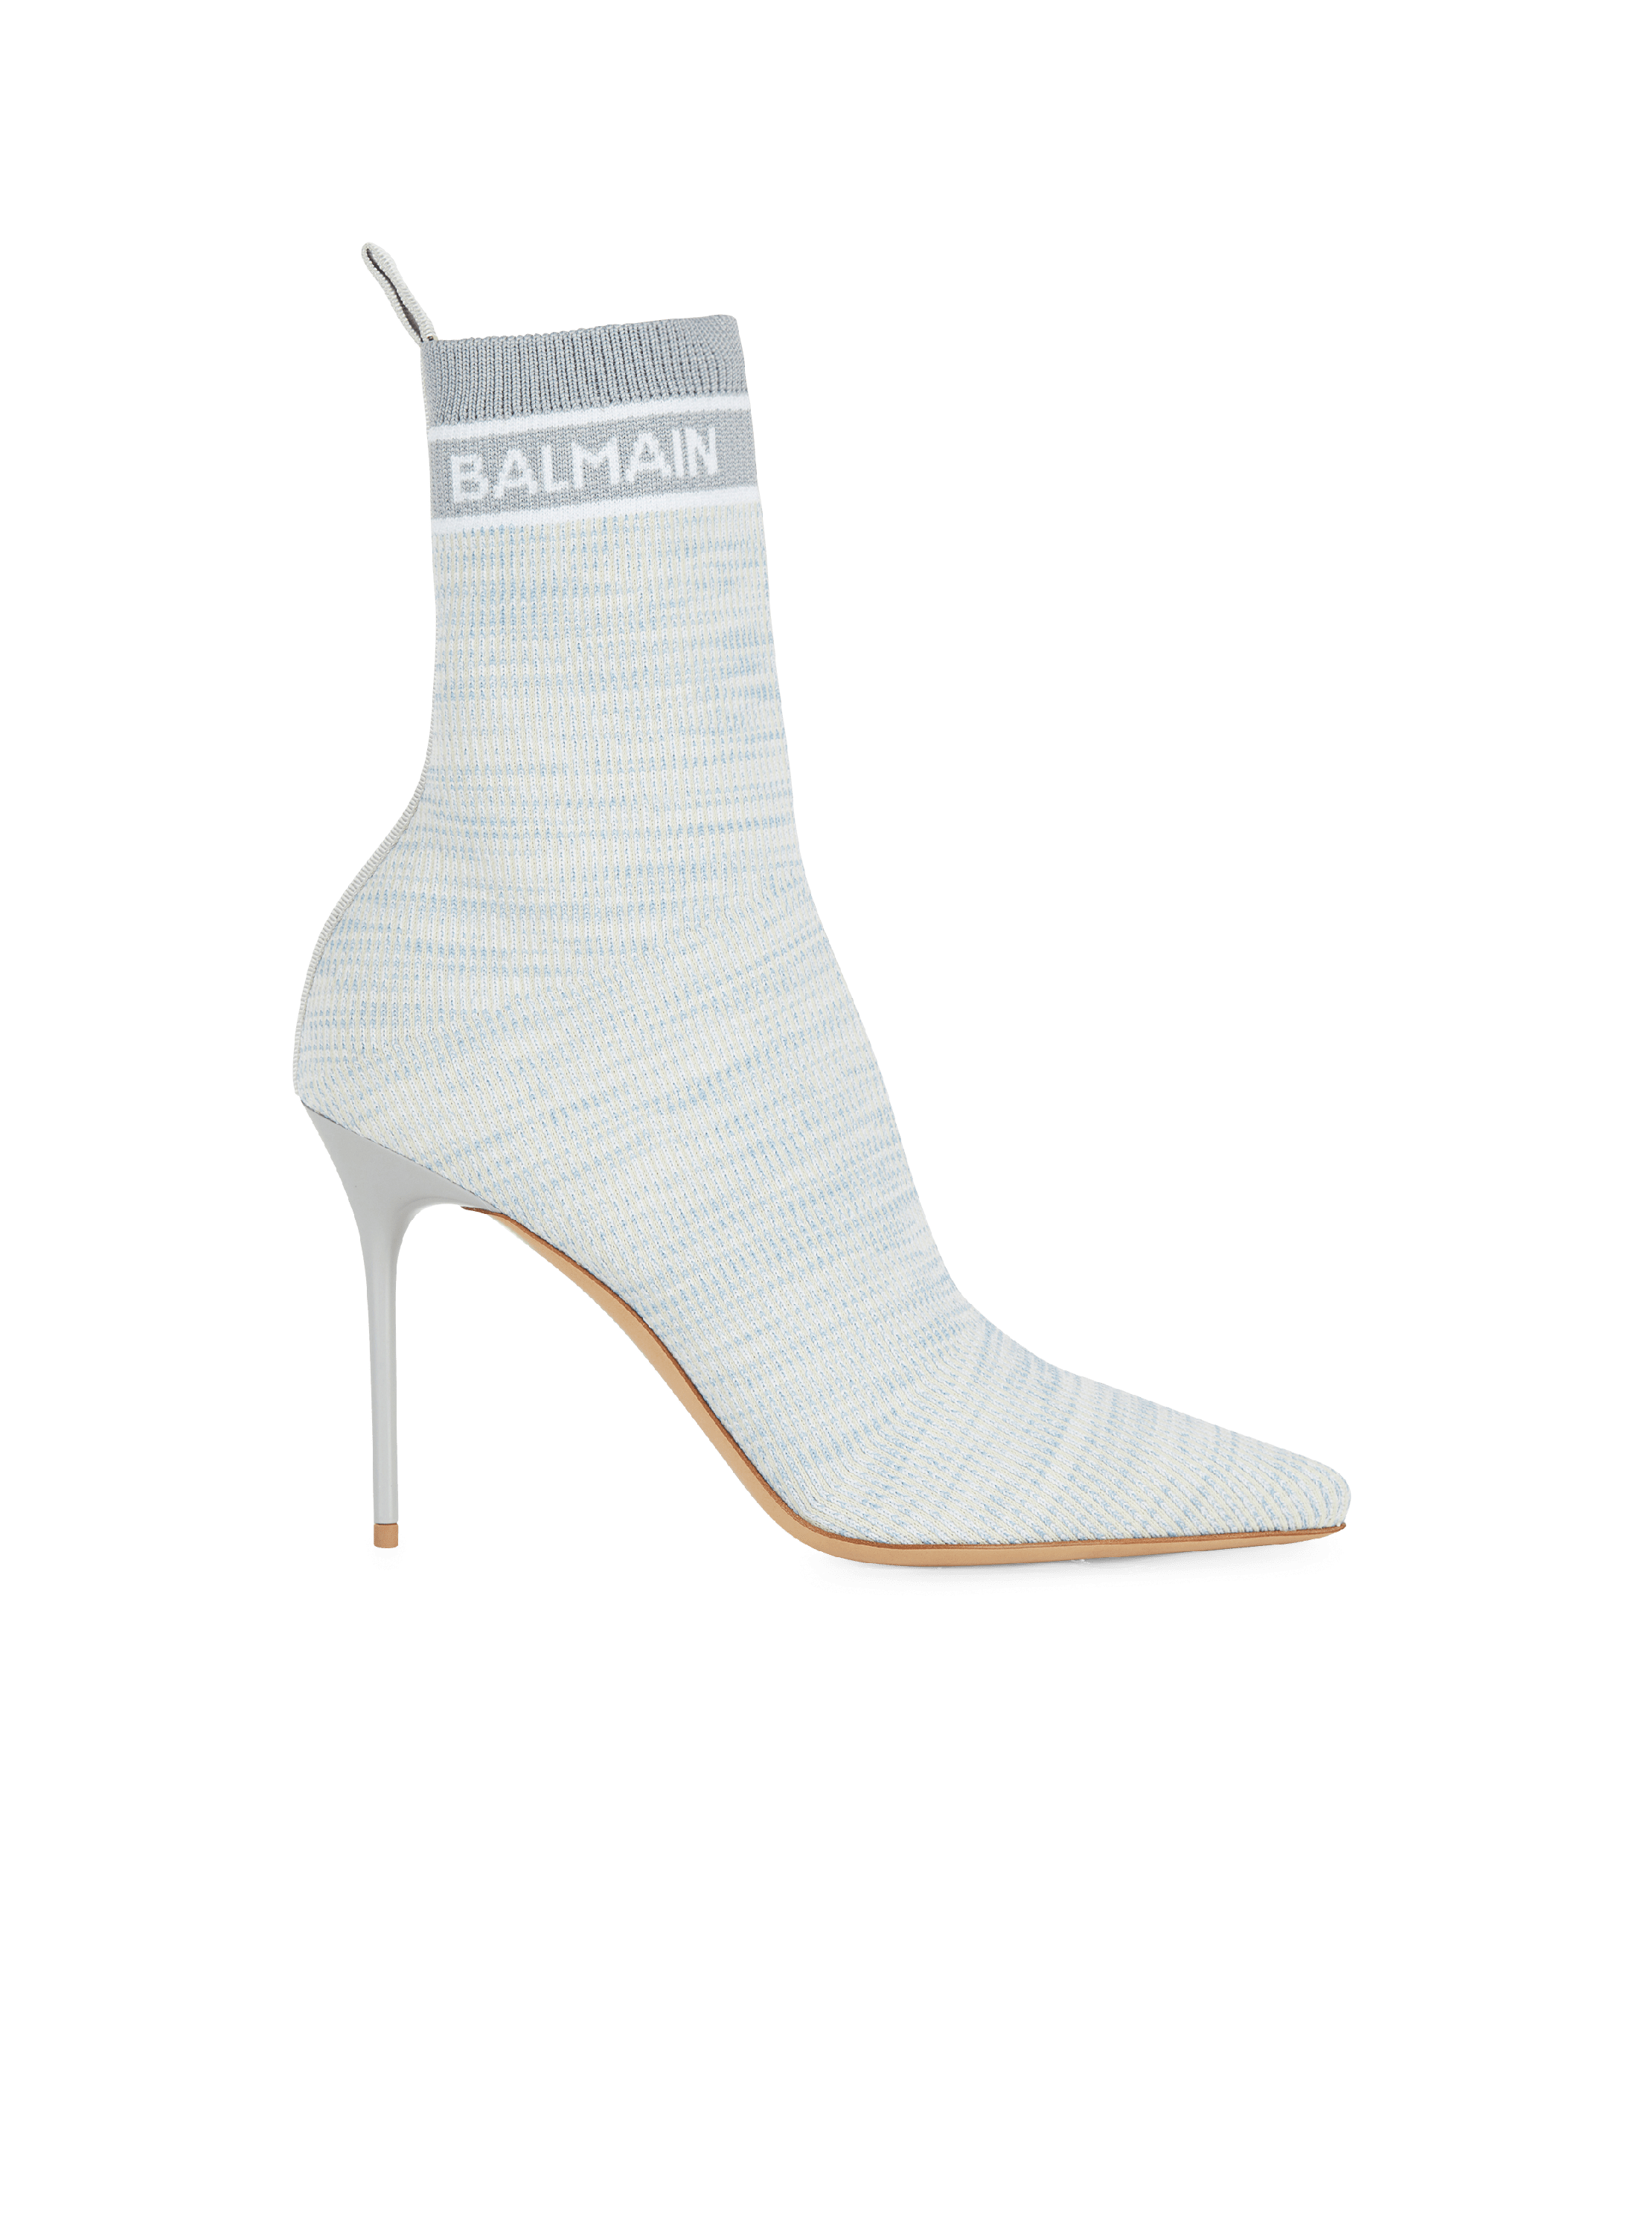 Skye knit ankle boots, blue, hi-res